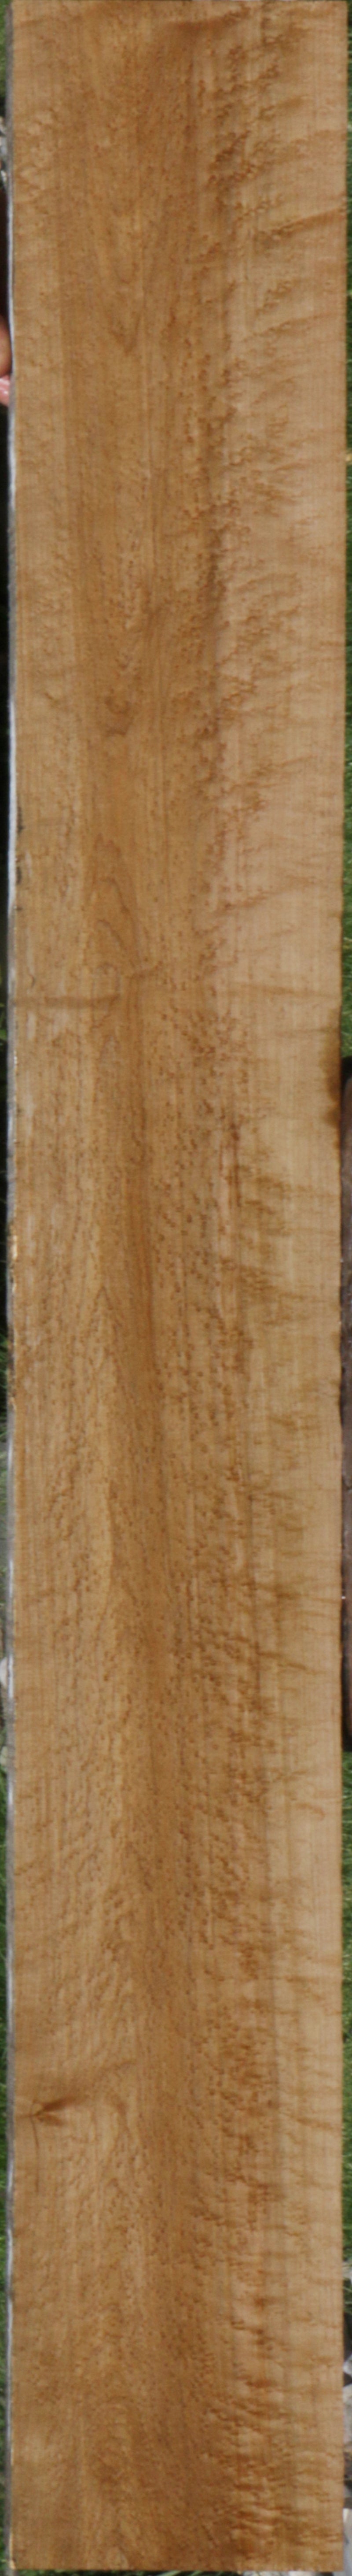 Exhibition Birdseye Maple Lumber